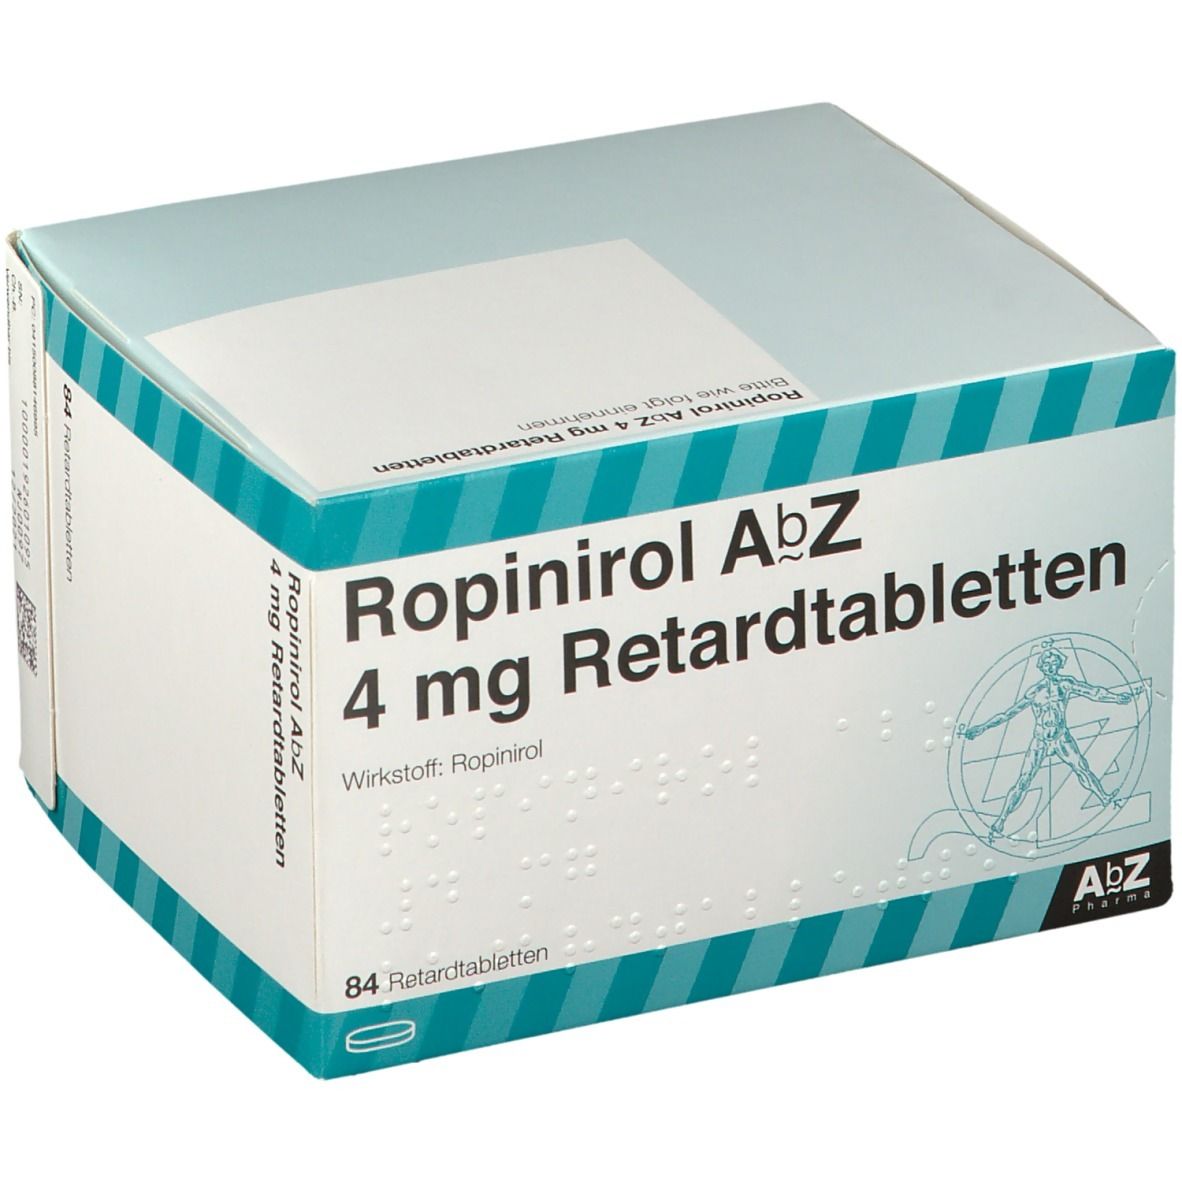 Ropinirol AbZ 4Mg